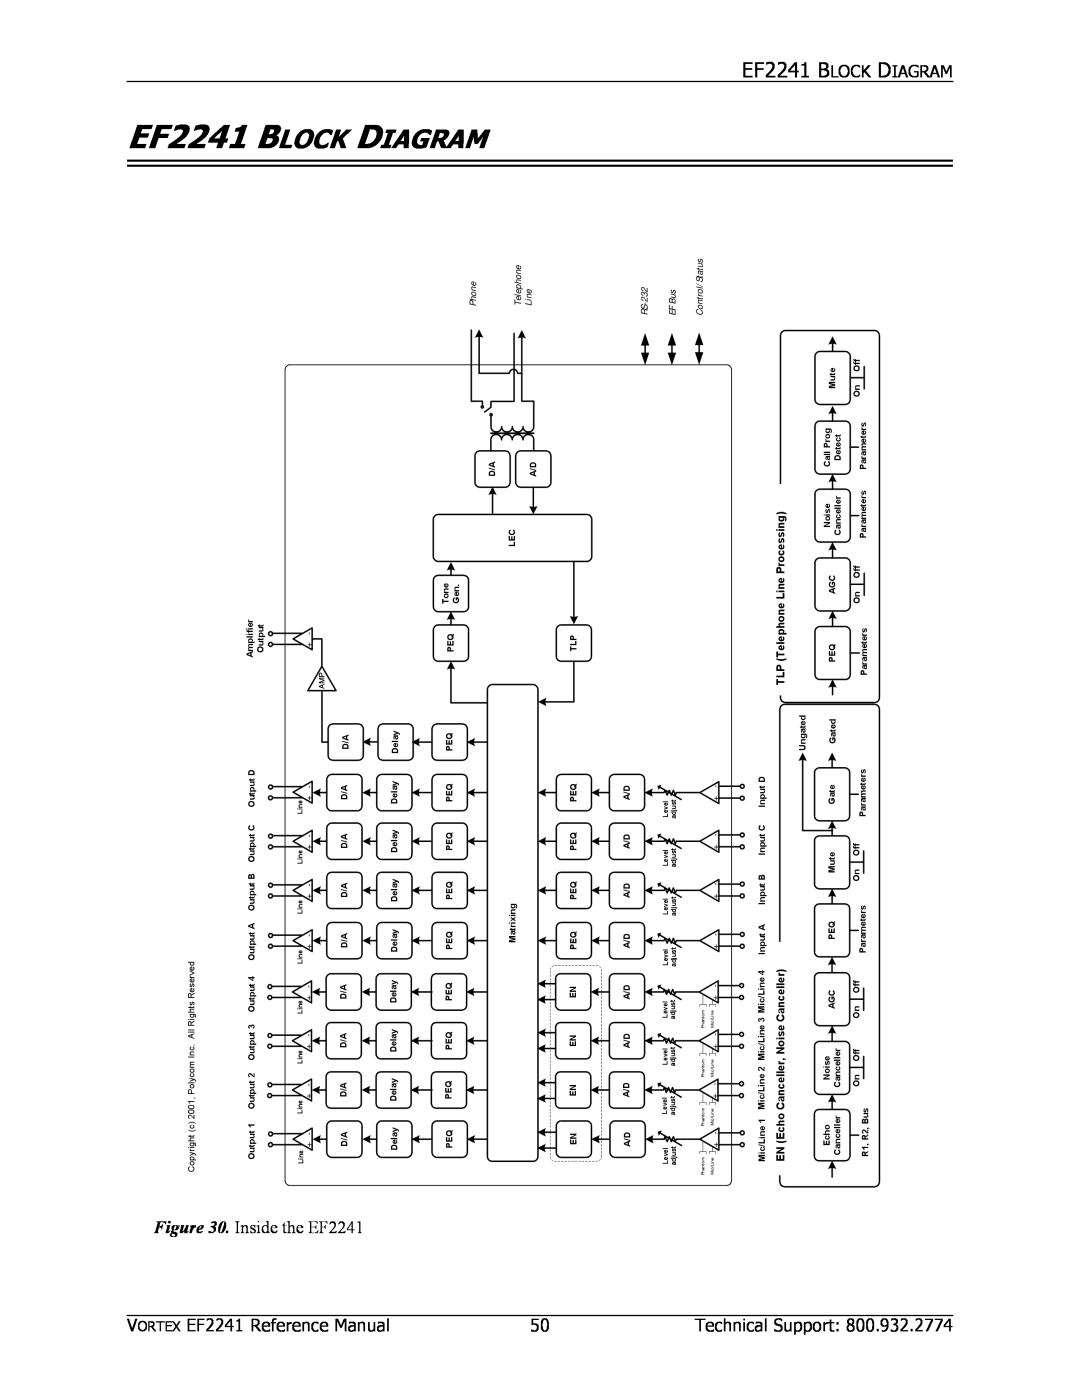 Polycom EF2241 BLOCK DIAGRAM, V ORTEX EF2241 Reference Manual, Technical Support, EN Echo Canceller, Noise Canceller 